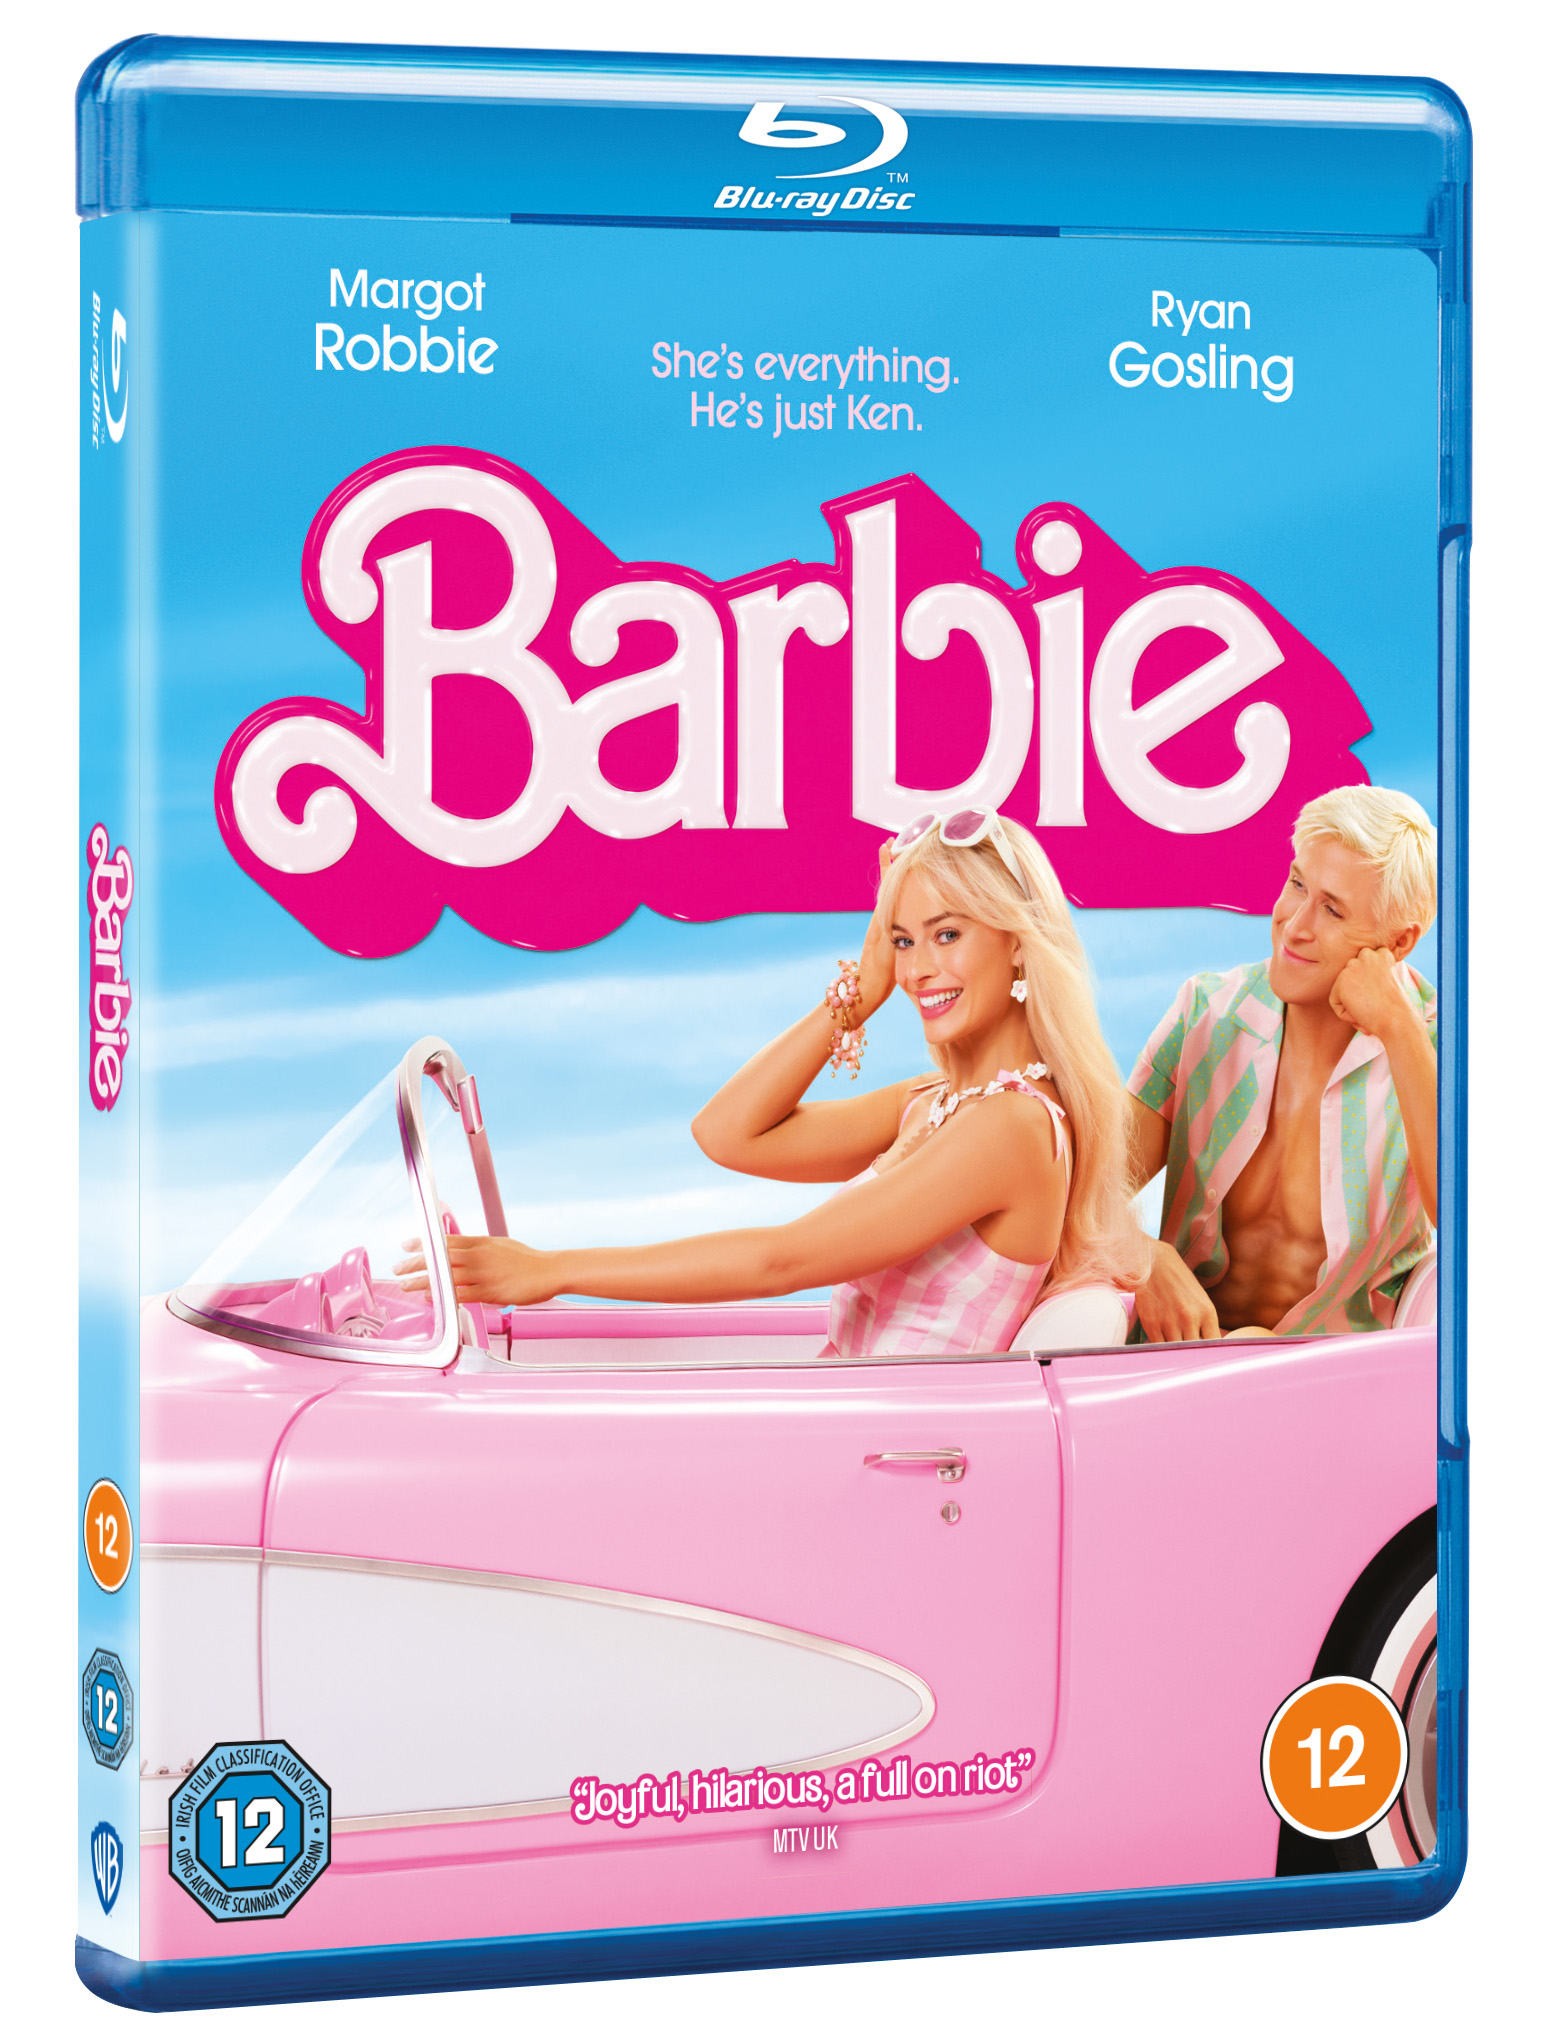 Greta Gerwig's Barbie on Blu-ray